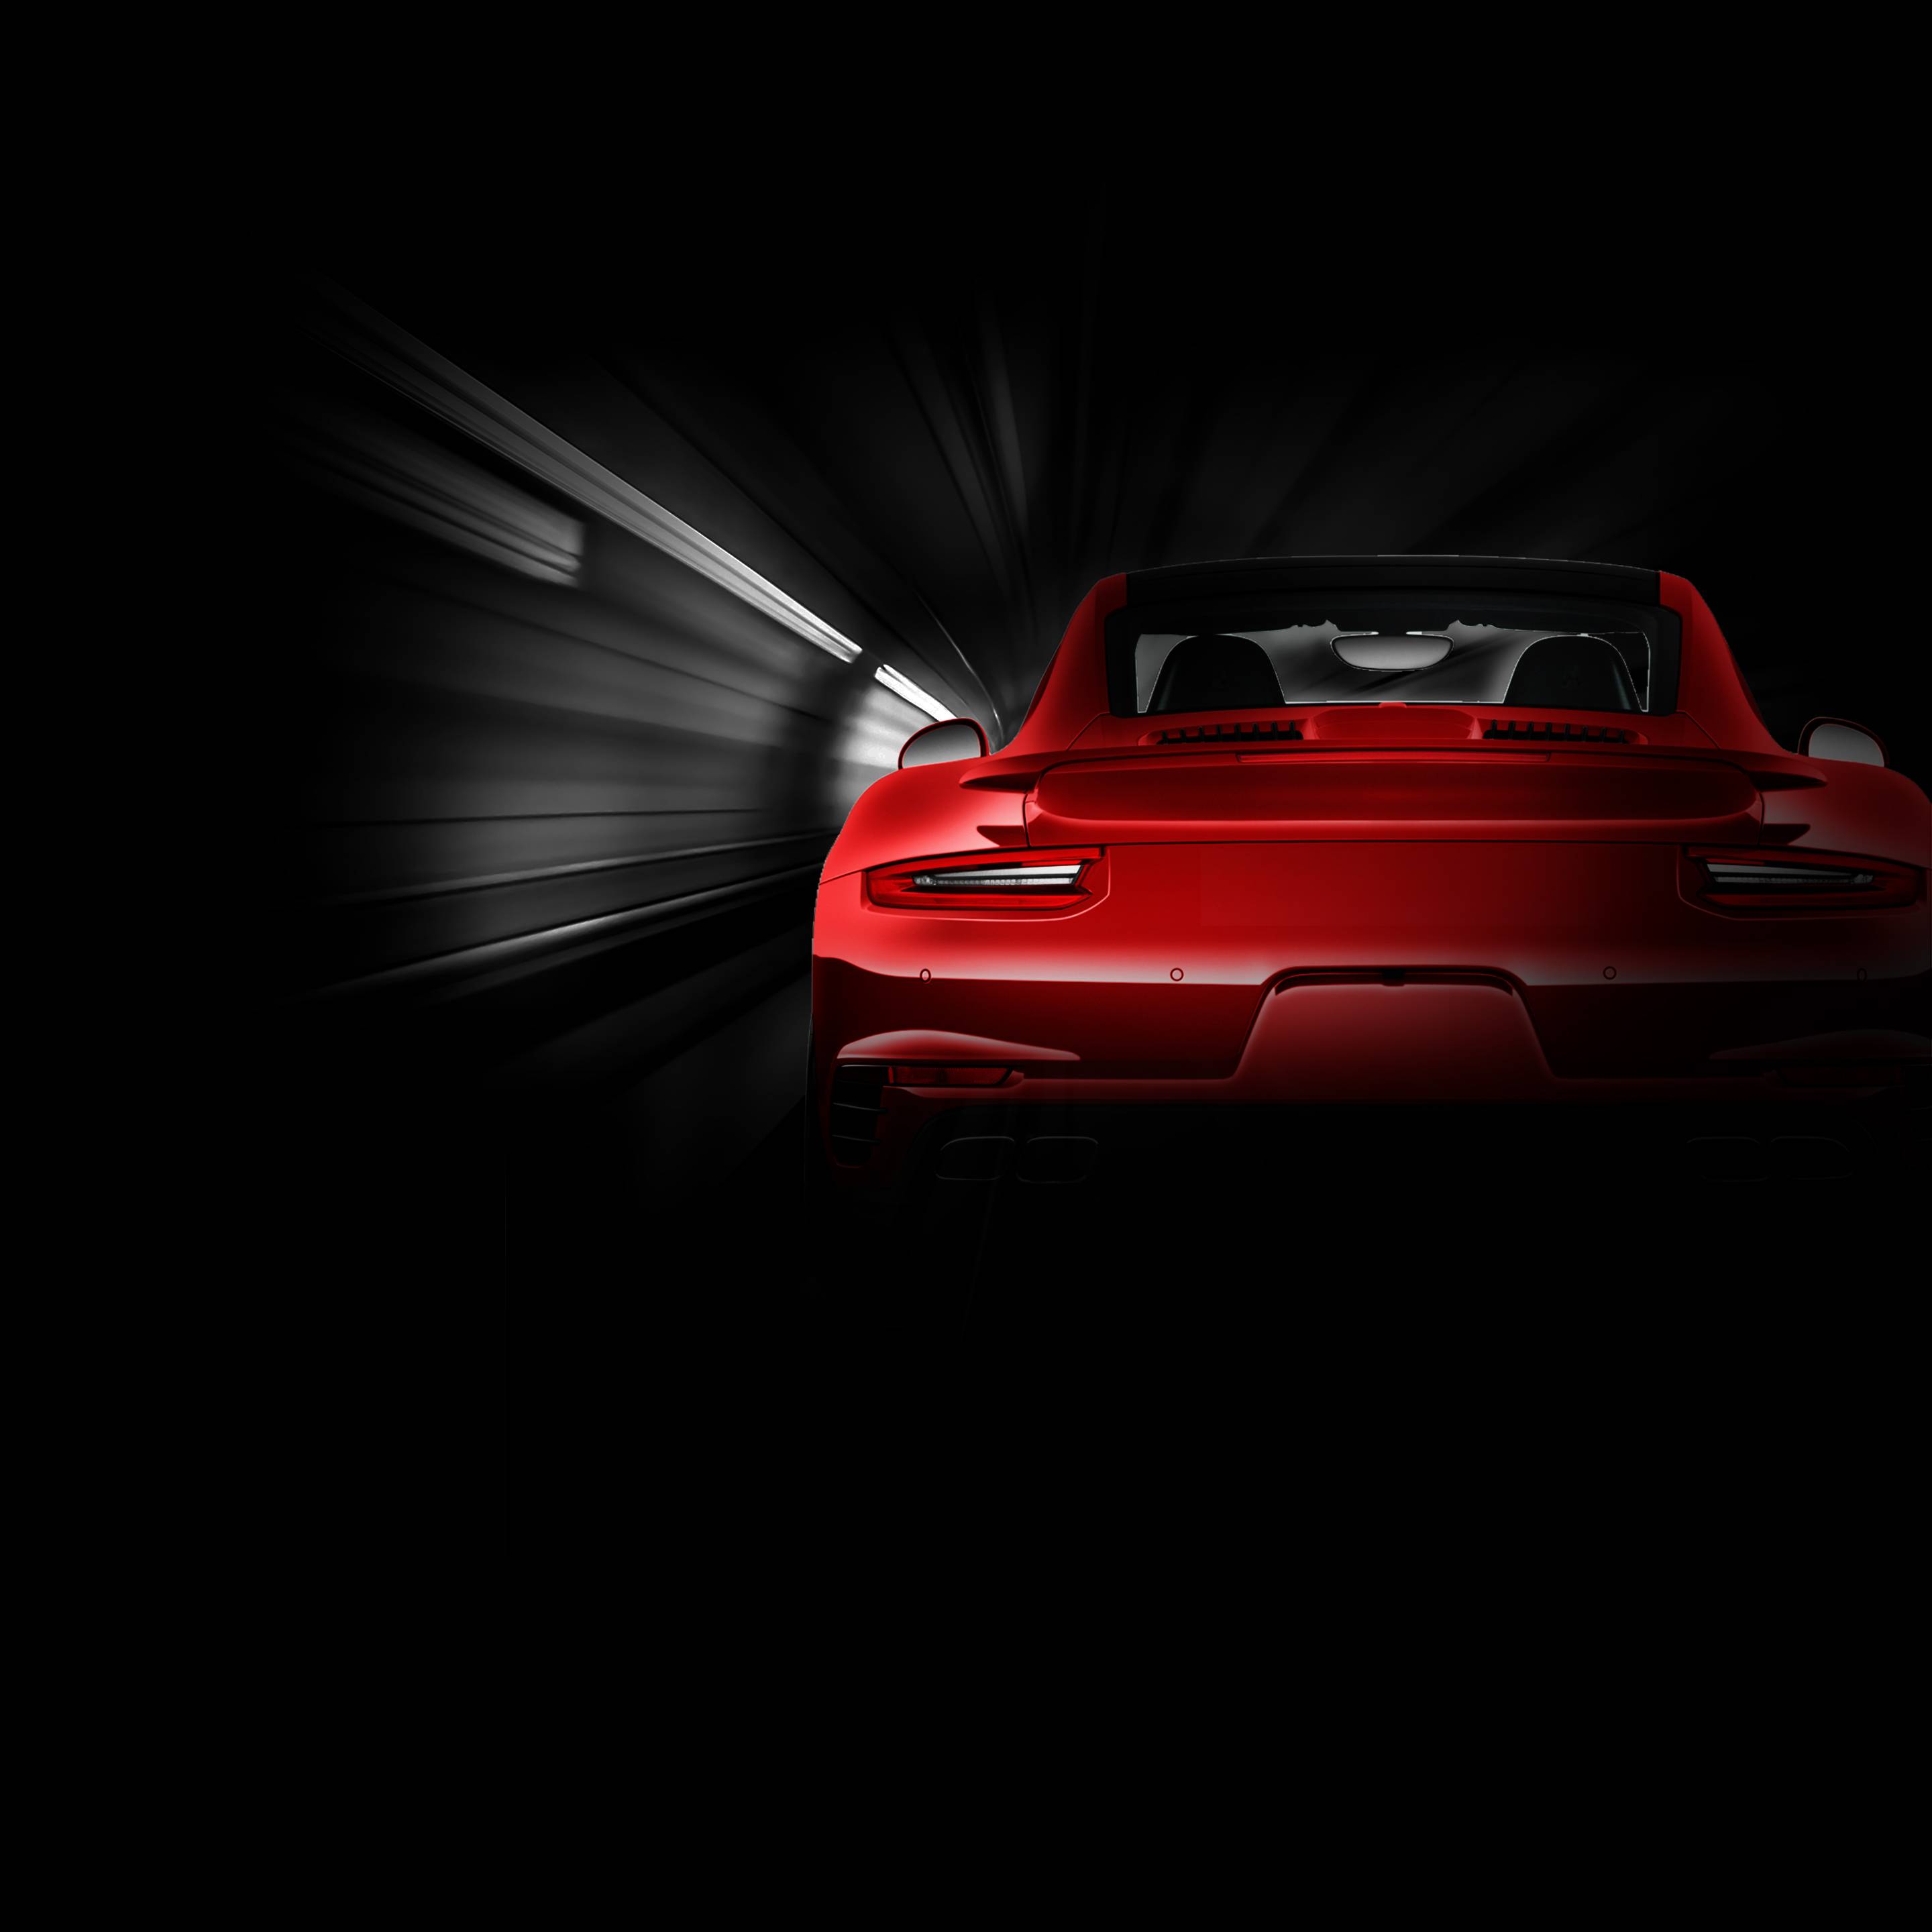 fond d'écran huawei mate 8,véhicule,voiture,rouge,voiture de performance,voiture de luxe personnelle